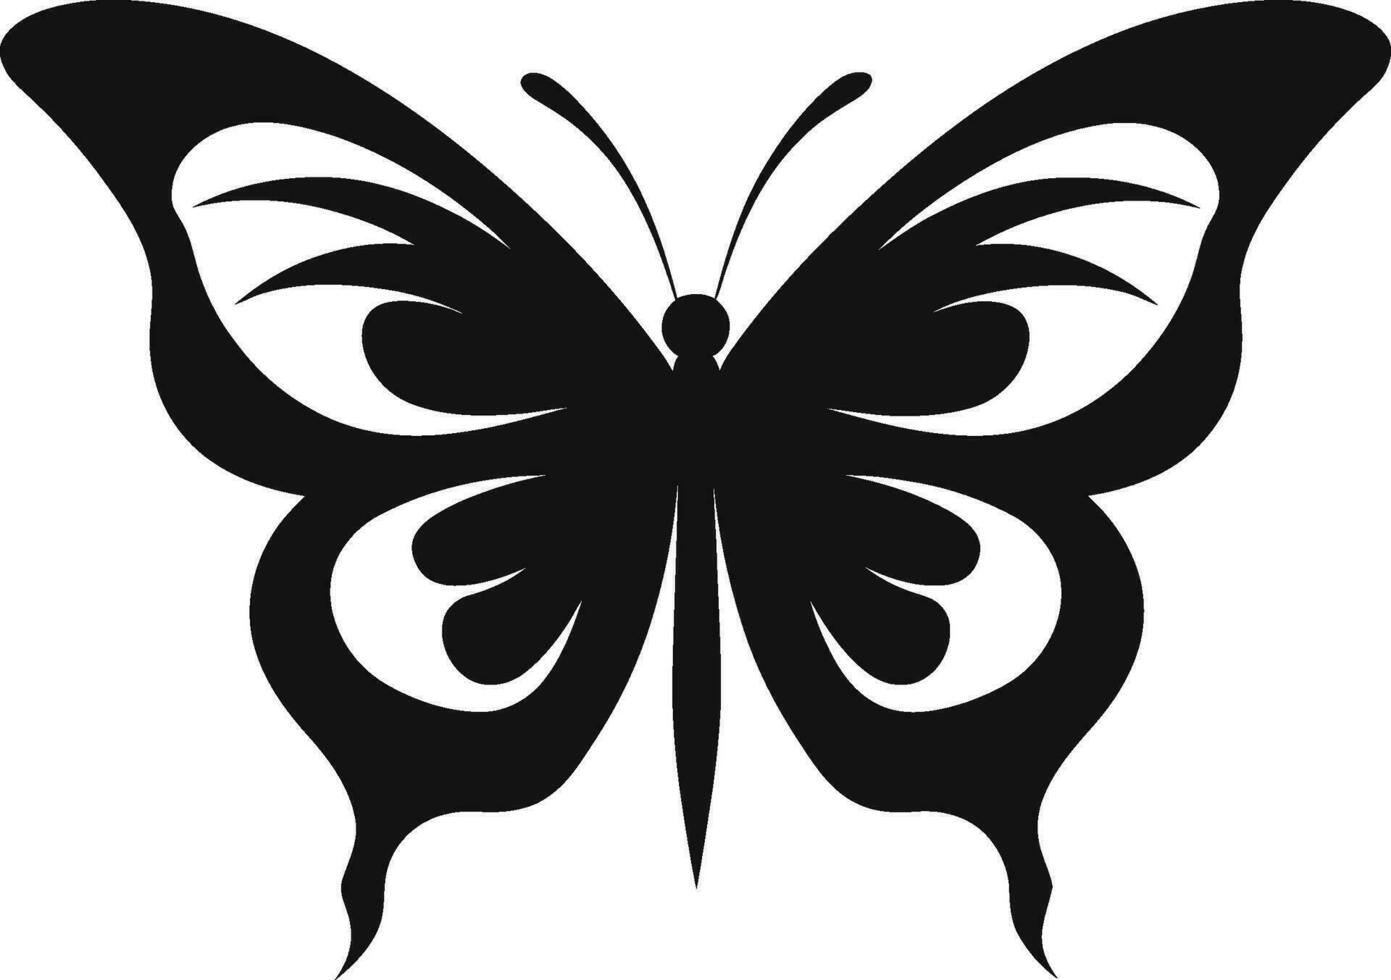 Mystique of the Butterfly Black Vector Logo Graceful Flutter Black Butterfly Emblem